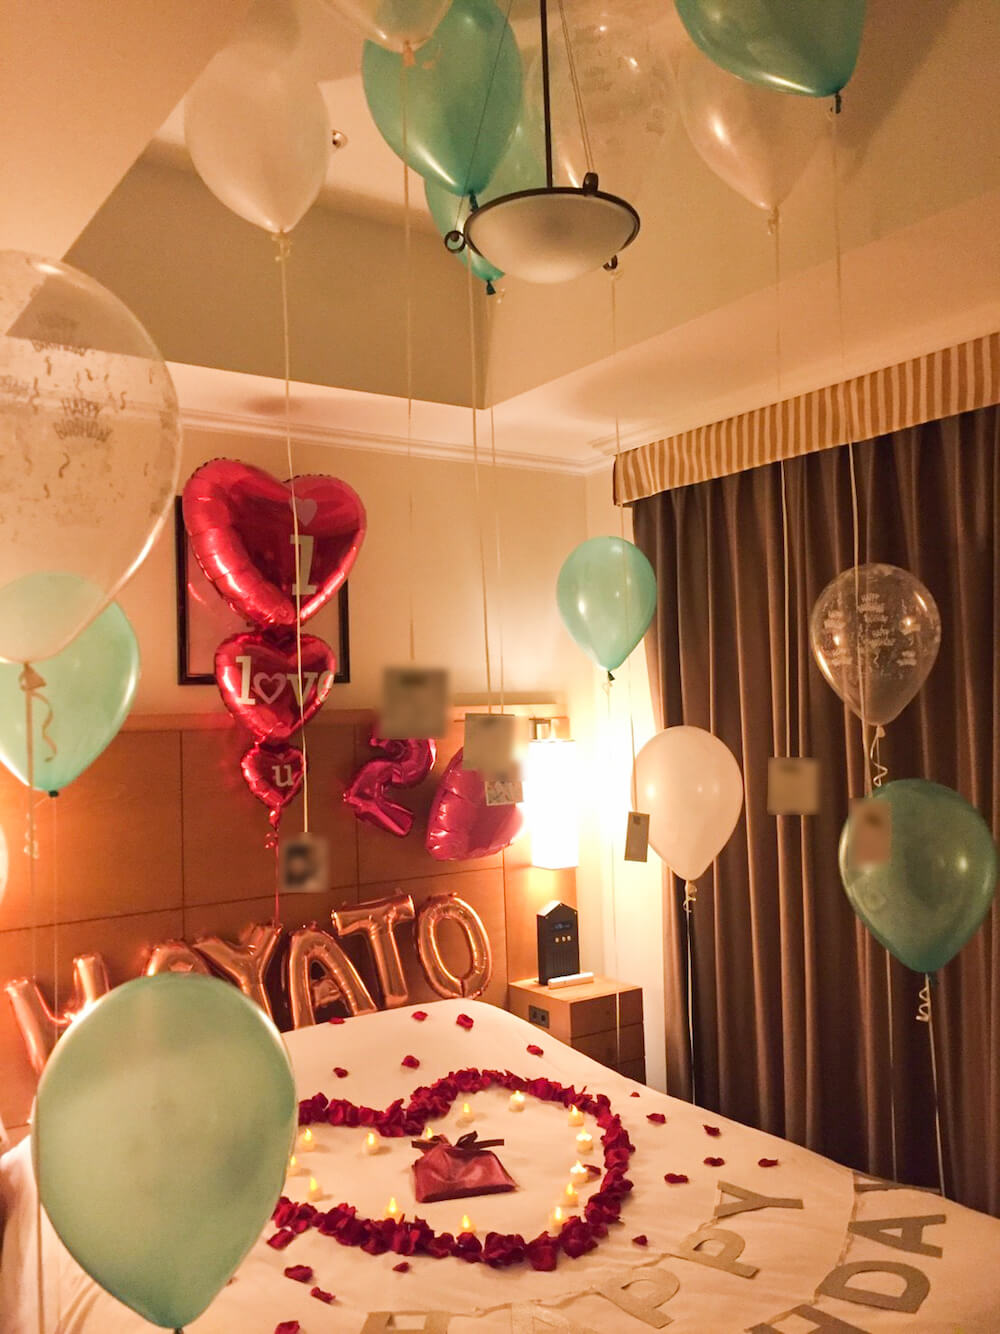 No 175 彼氏様のお誕生日にホテルでバースデーサプライズ バルーン出張装飾 ホテルサプライズ 誕生日やプロポーズはアニプラバルーン